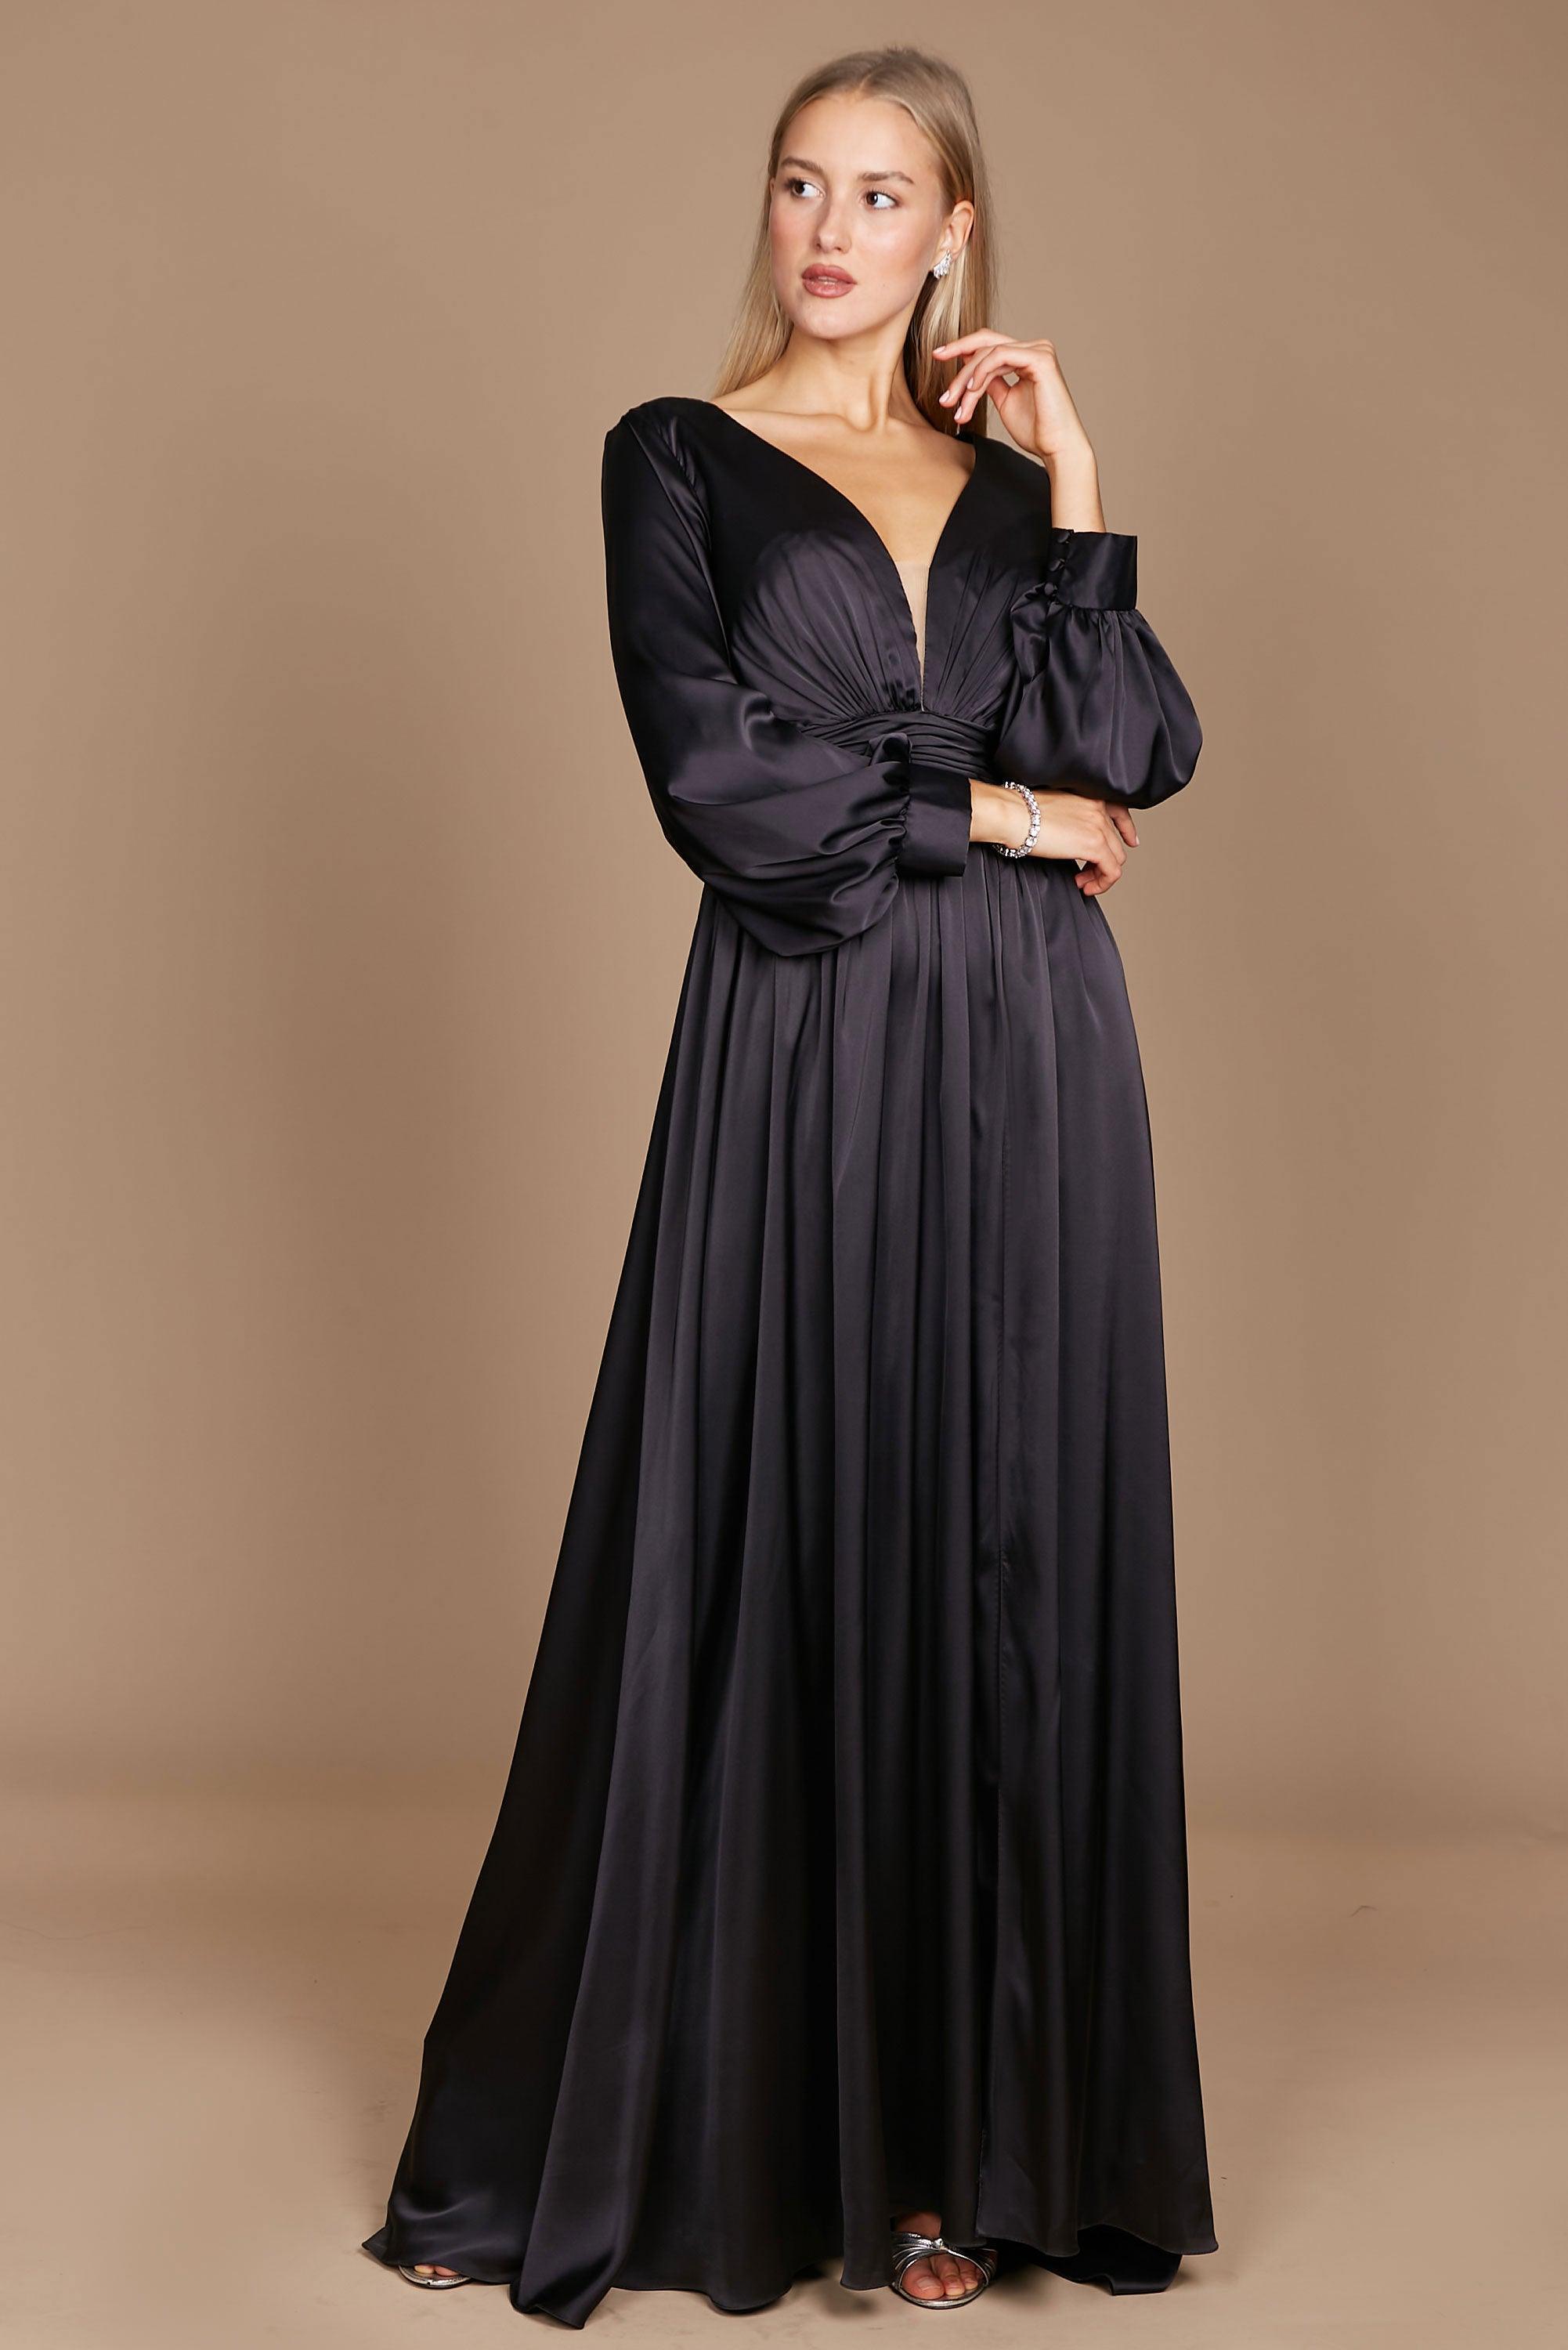 Formal Dresses Long Sleeve Formal Evening Party Dress Black